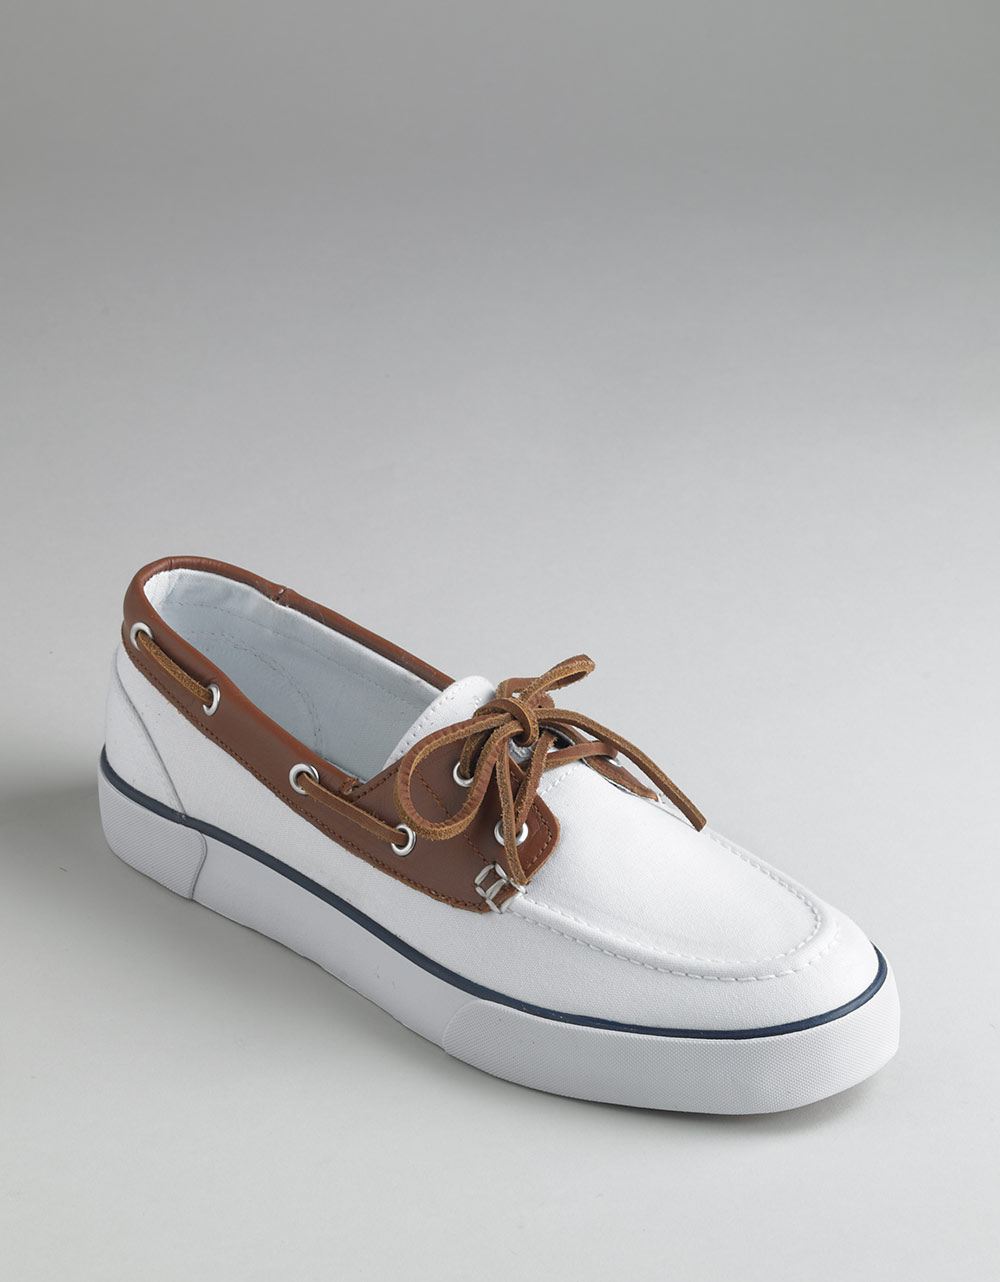 Polo Ralph Lauren Rylander Canvas Boat Shoes in White for Men - Lyst